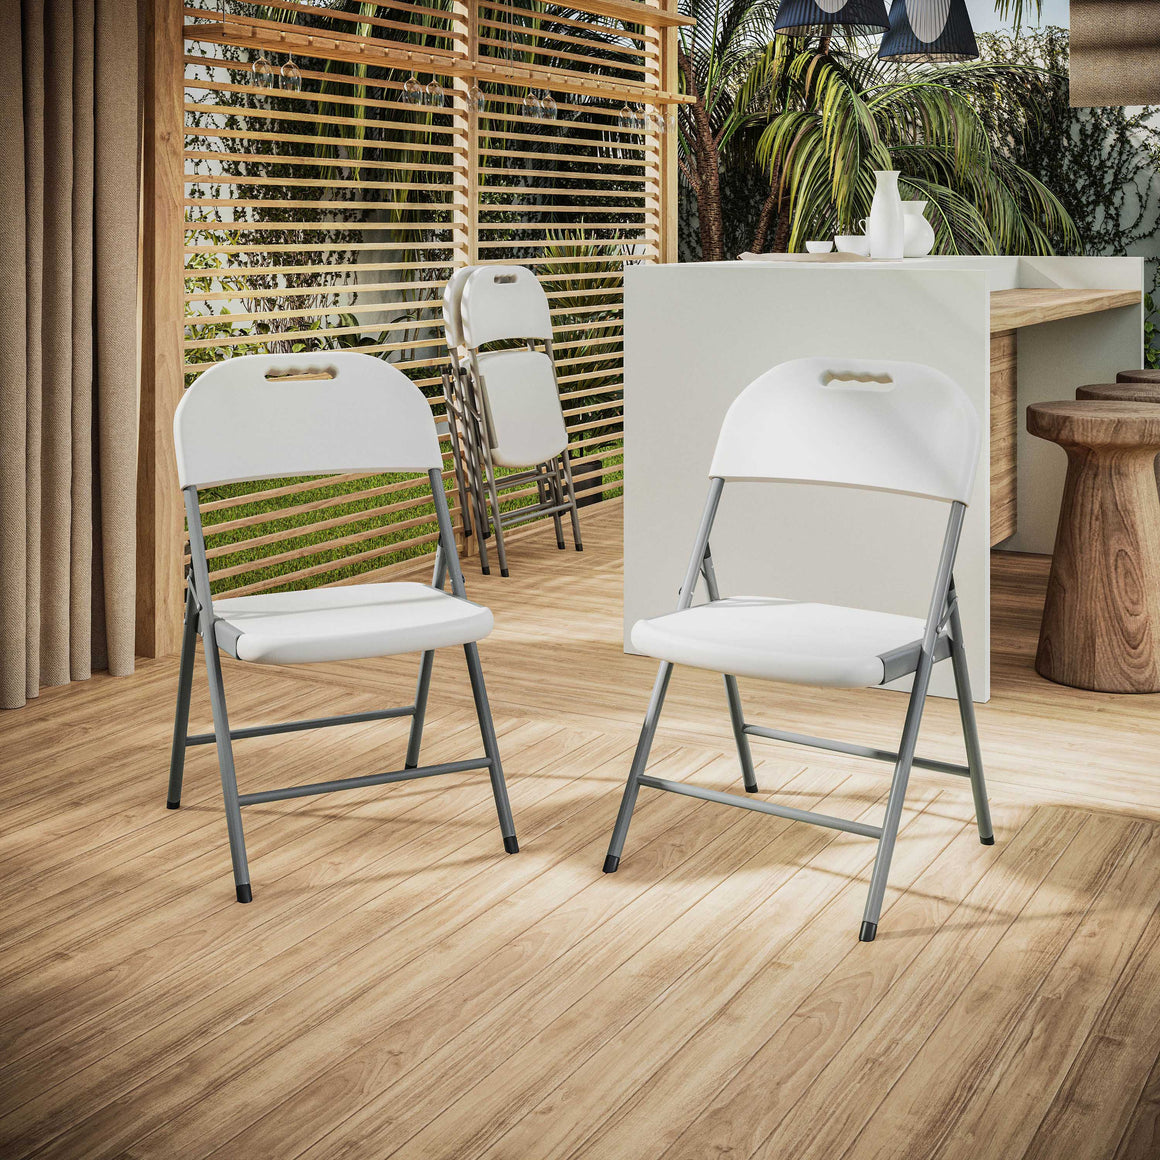 Granite White Folding Chairs – Set of 4